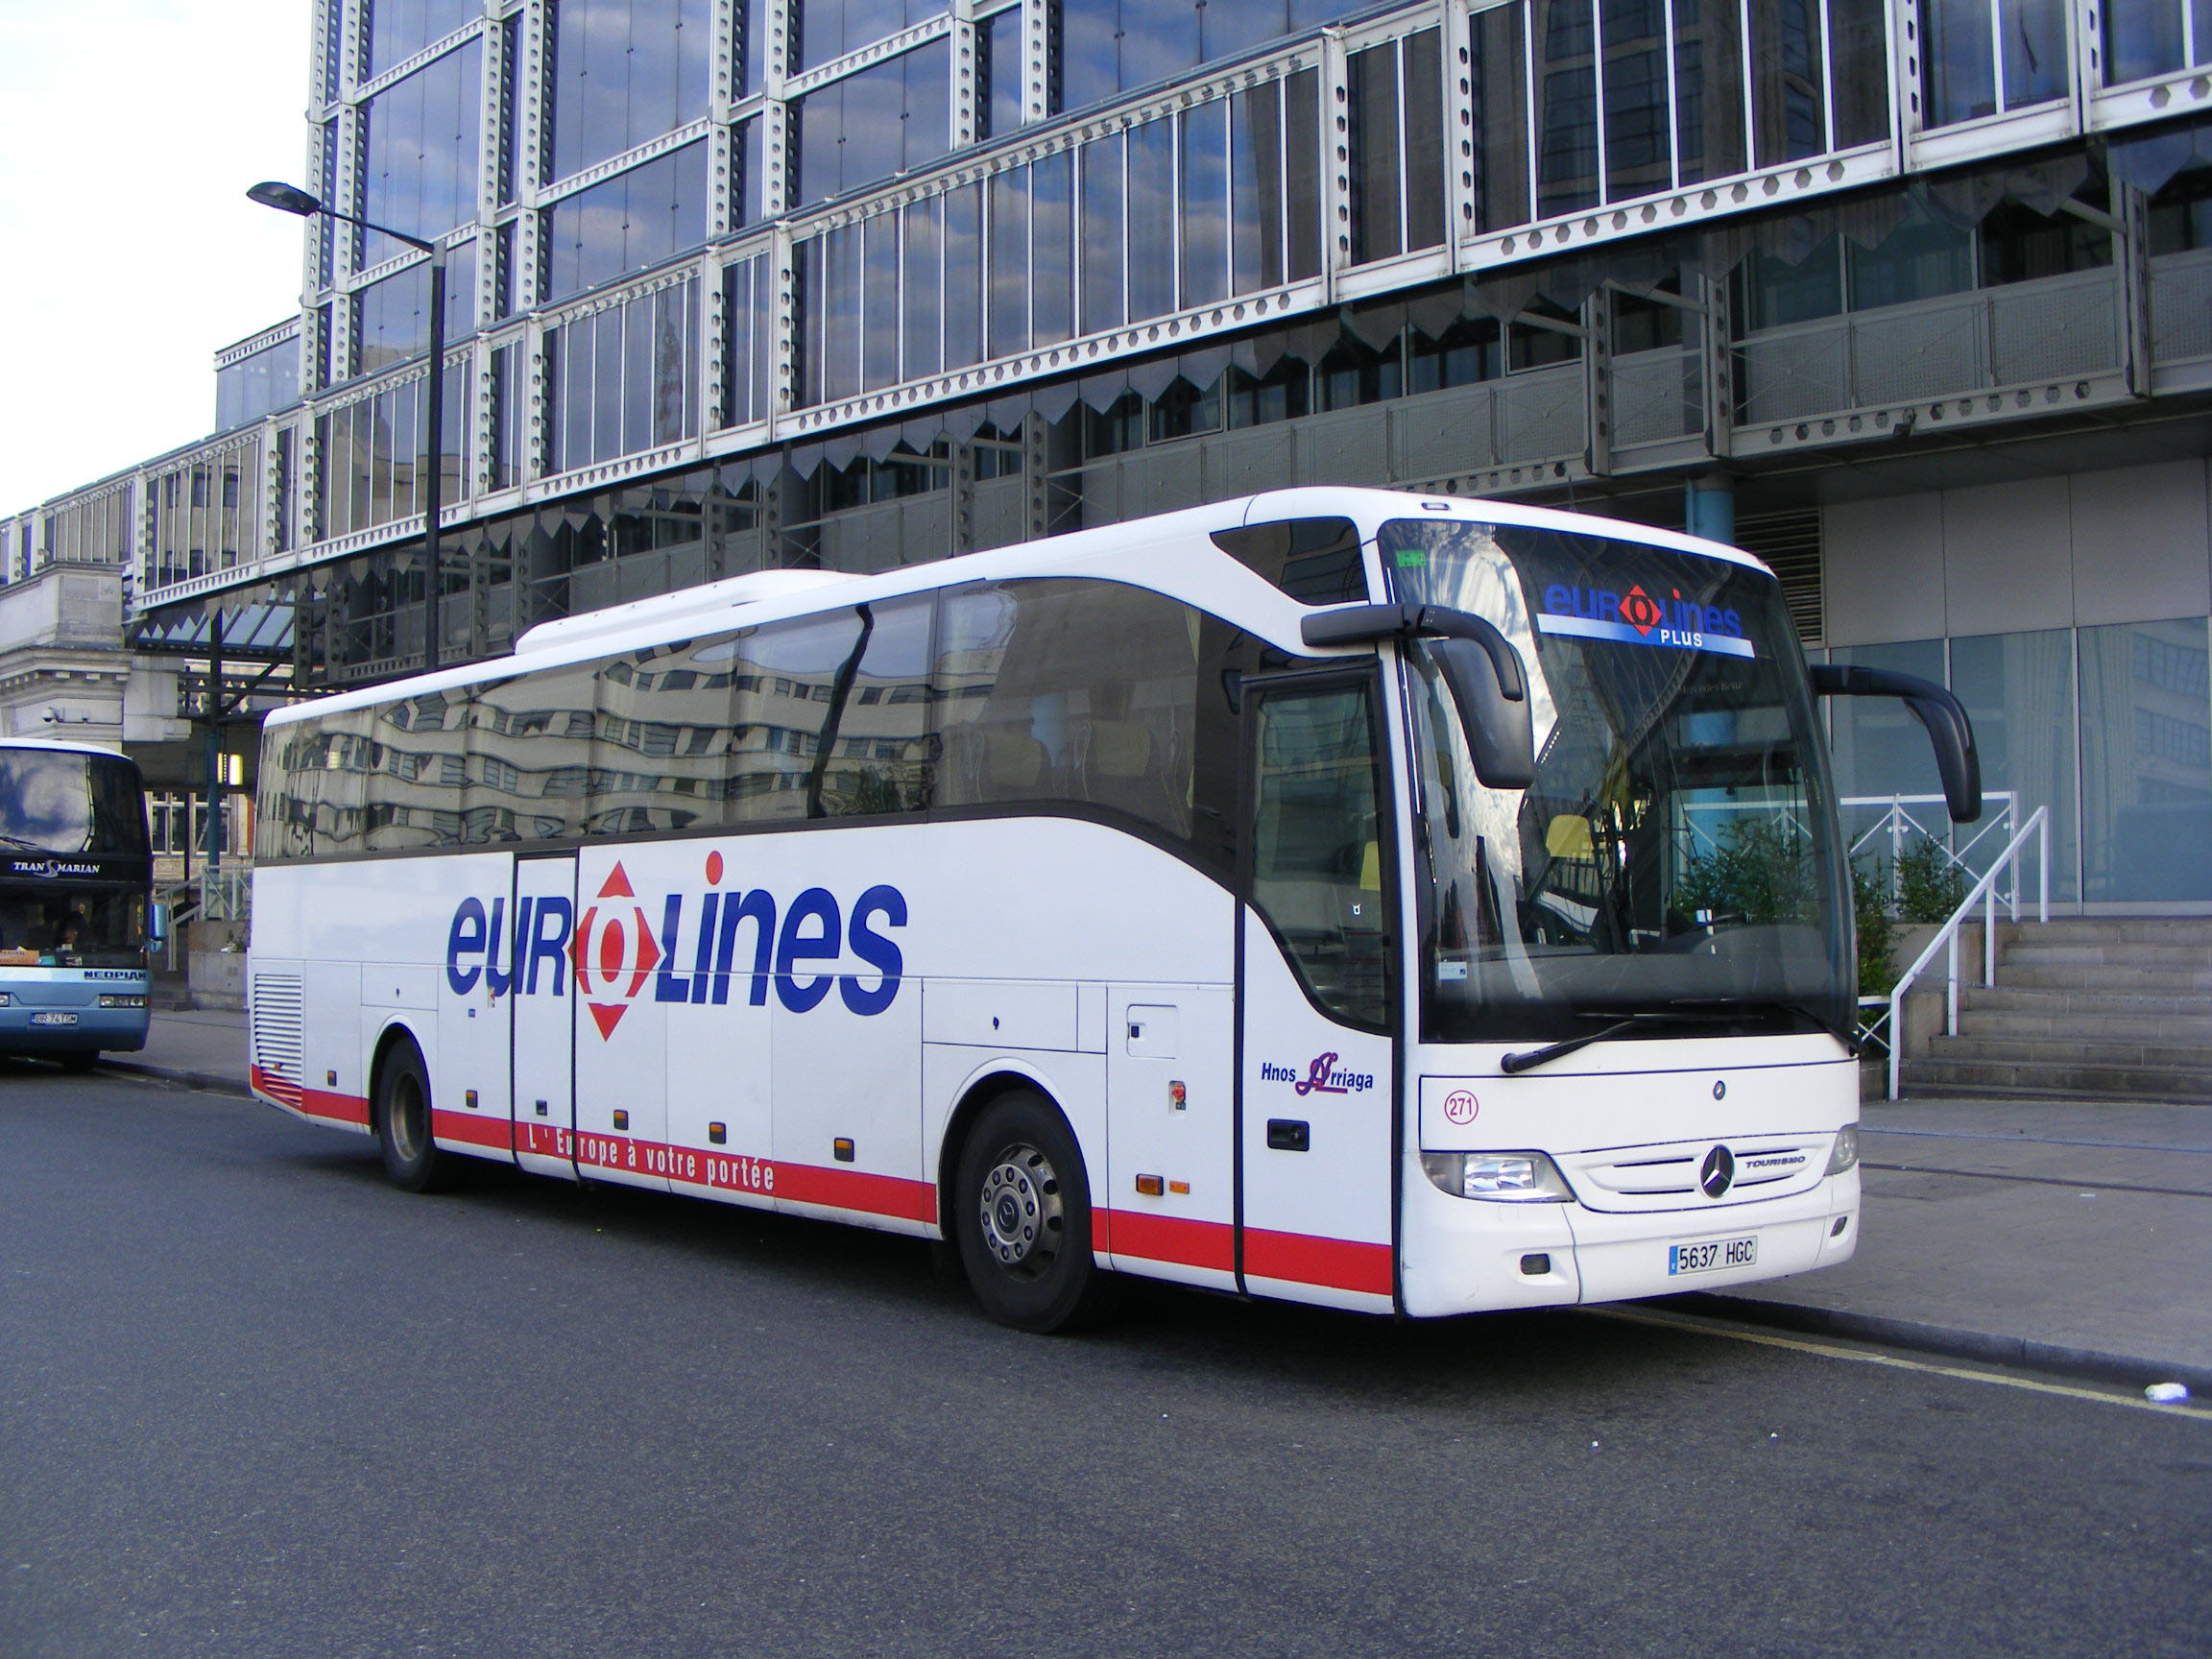 Eurolines Showbus International Coach Image Gallery Irizar Coaches